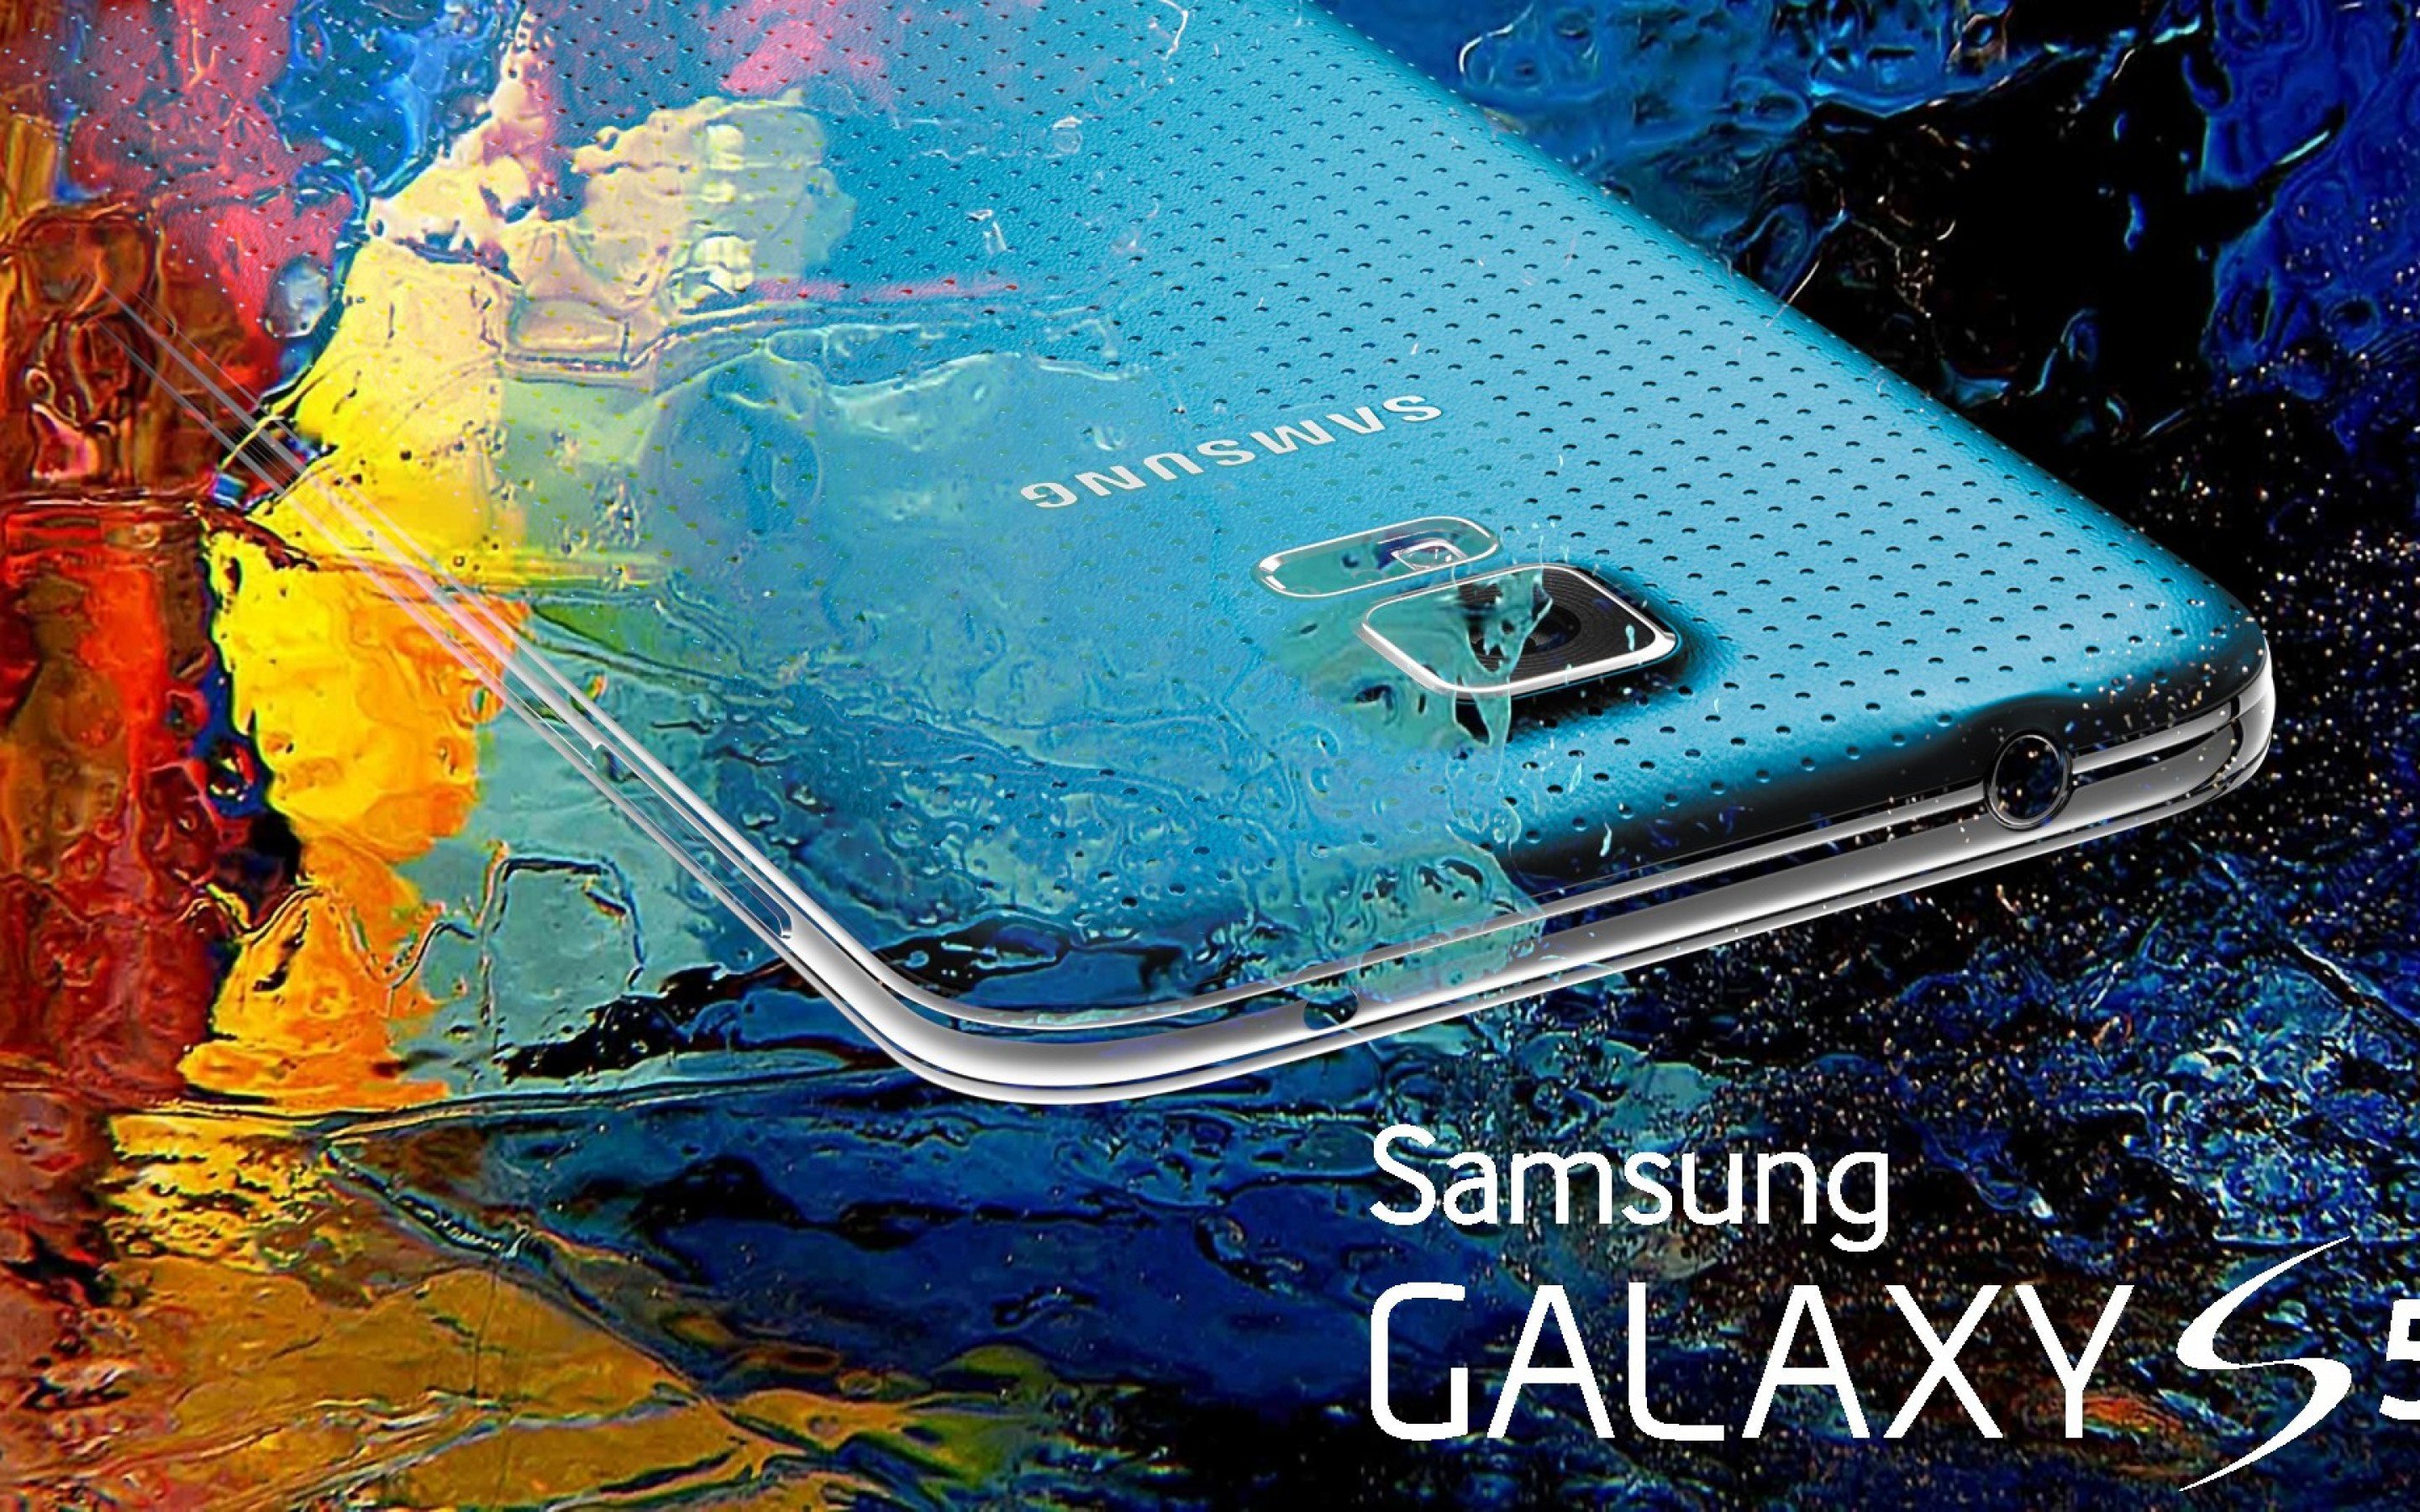 Картинки самсунг. Samsung Galaxy s5. Samsung Galaxy s10. Картинки на телефон самсунг галакси. Самсунг рабочий стол телефона.